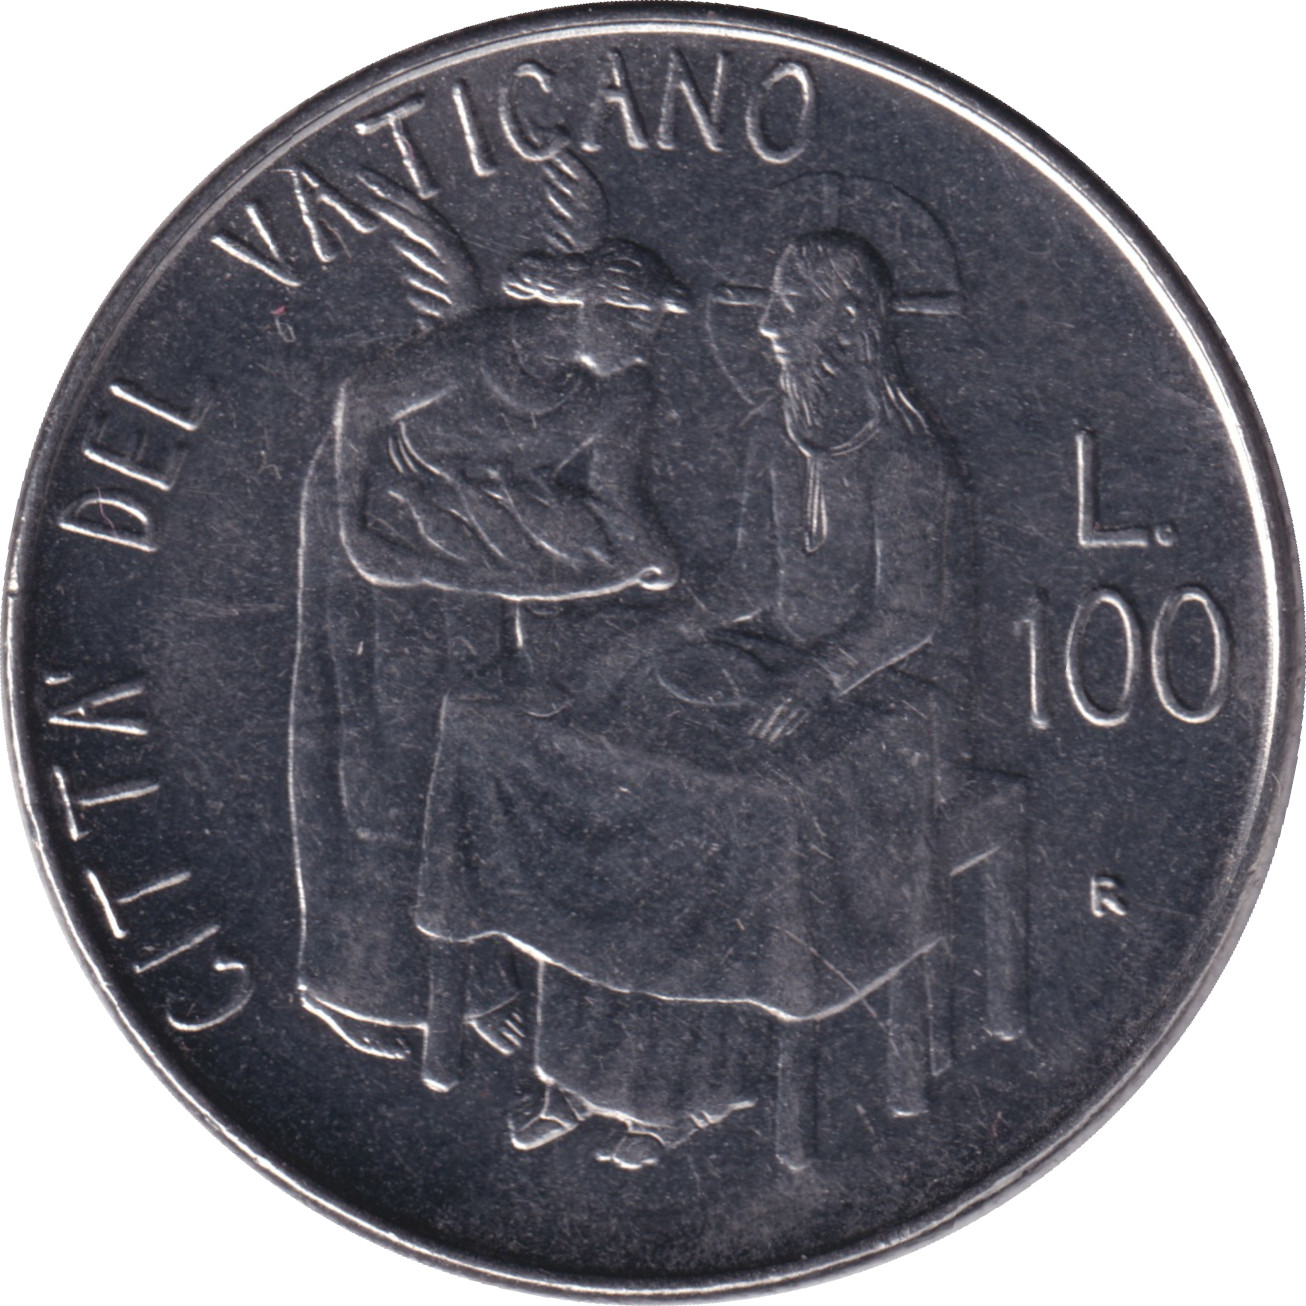 100 lire - John Paul II - Ange